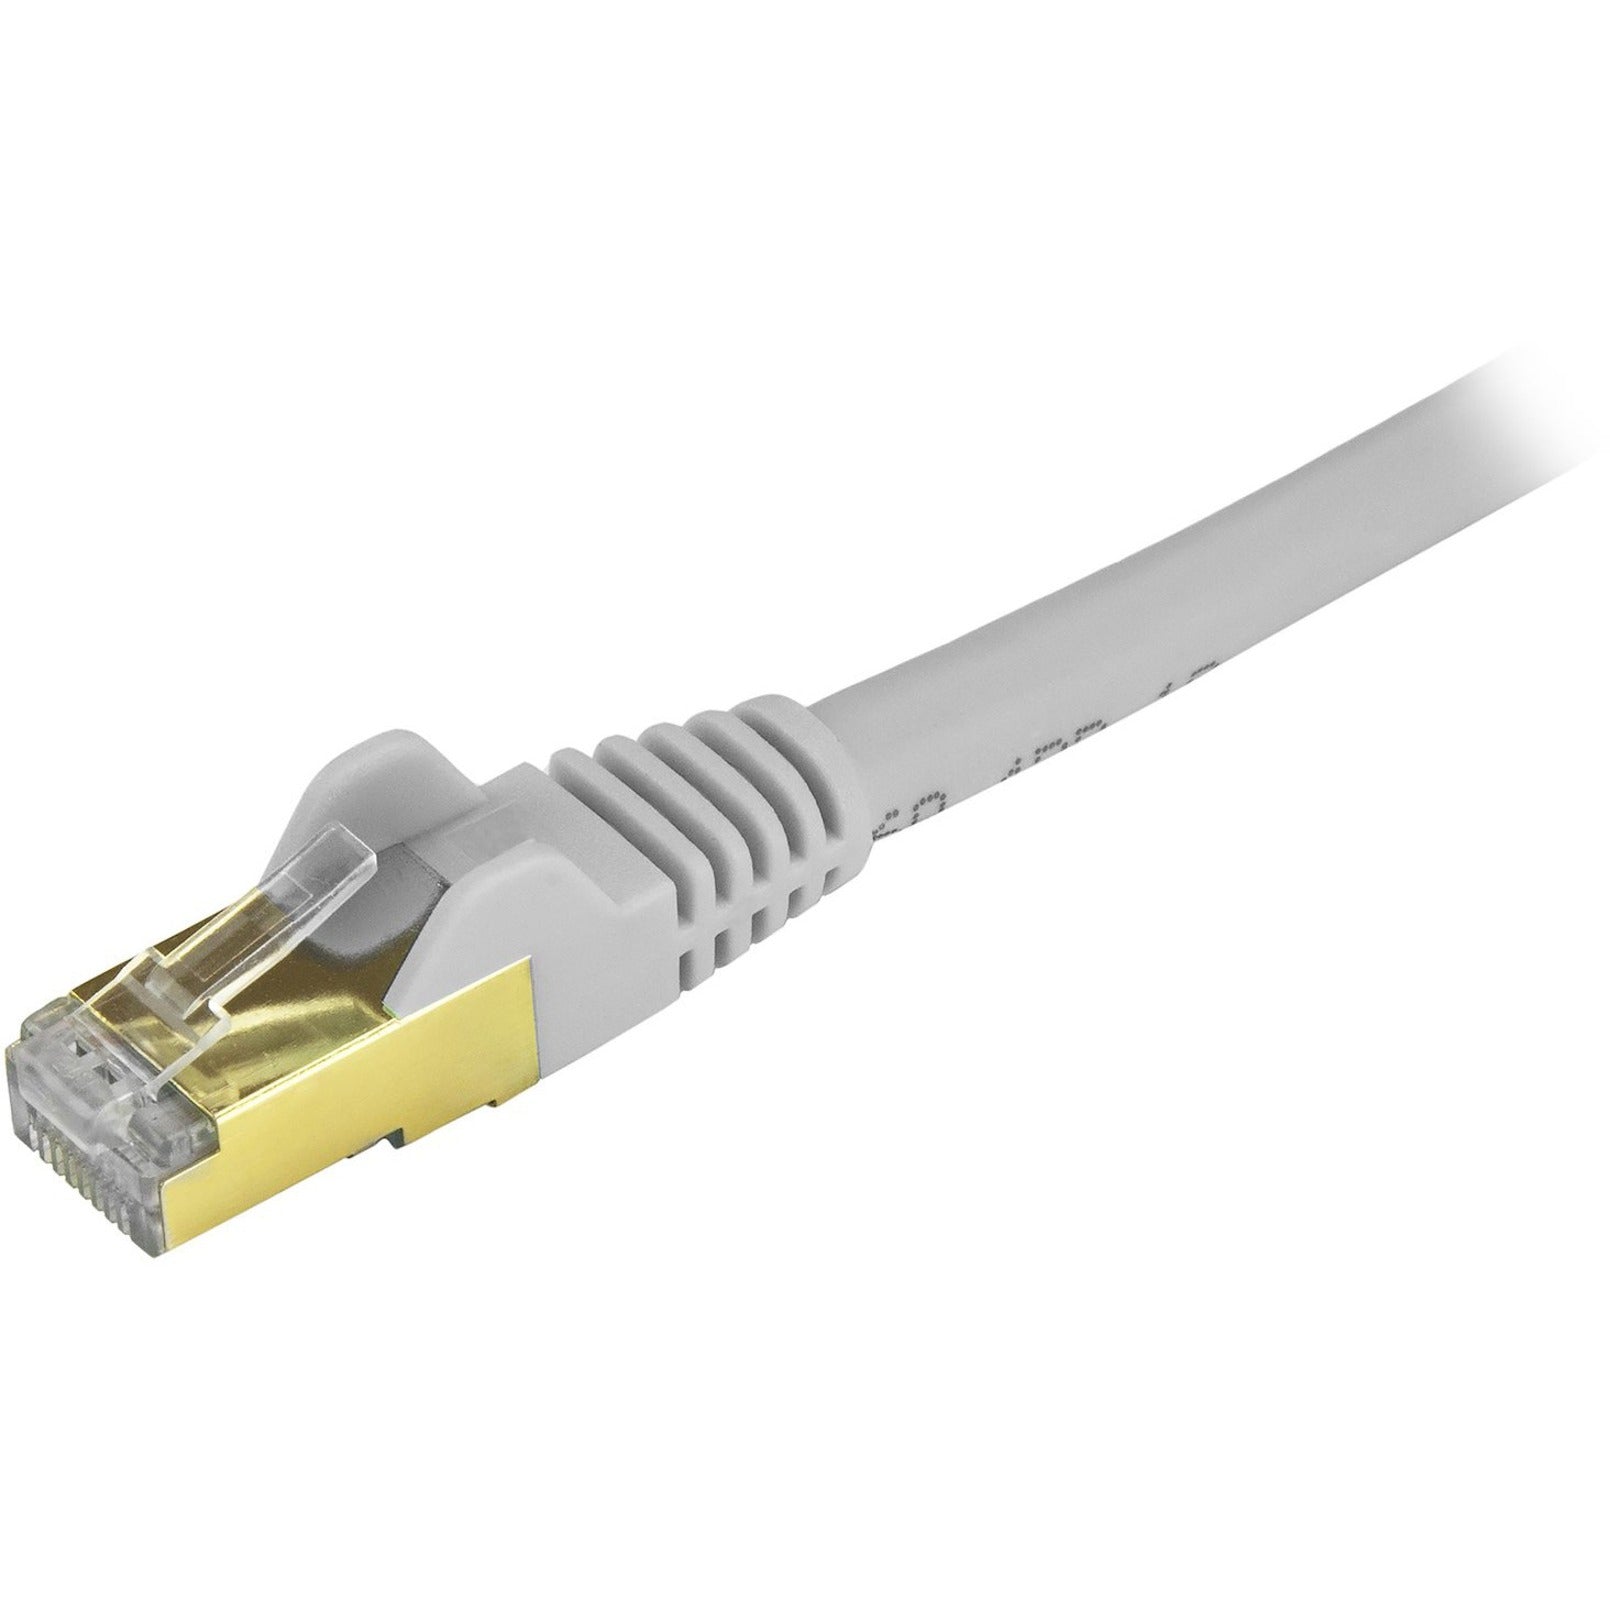 StarTech.com C6ASPAT20GR Cat6a Ethernet Patch Cable - Shielded (STP) - 20 ft., Gray, Snagless RJ45 - Long Ethernet Cord